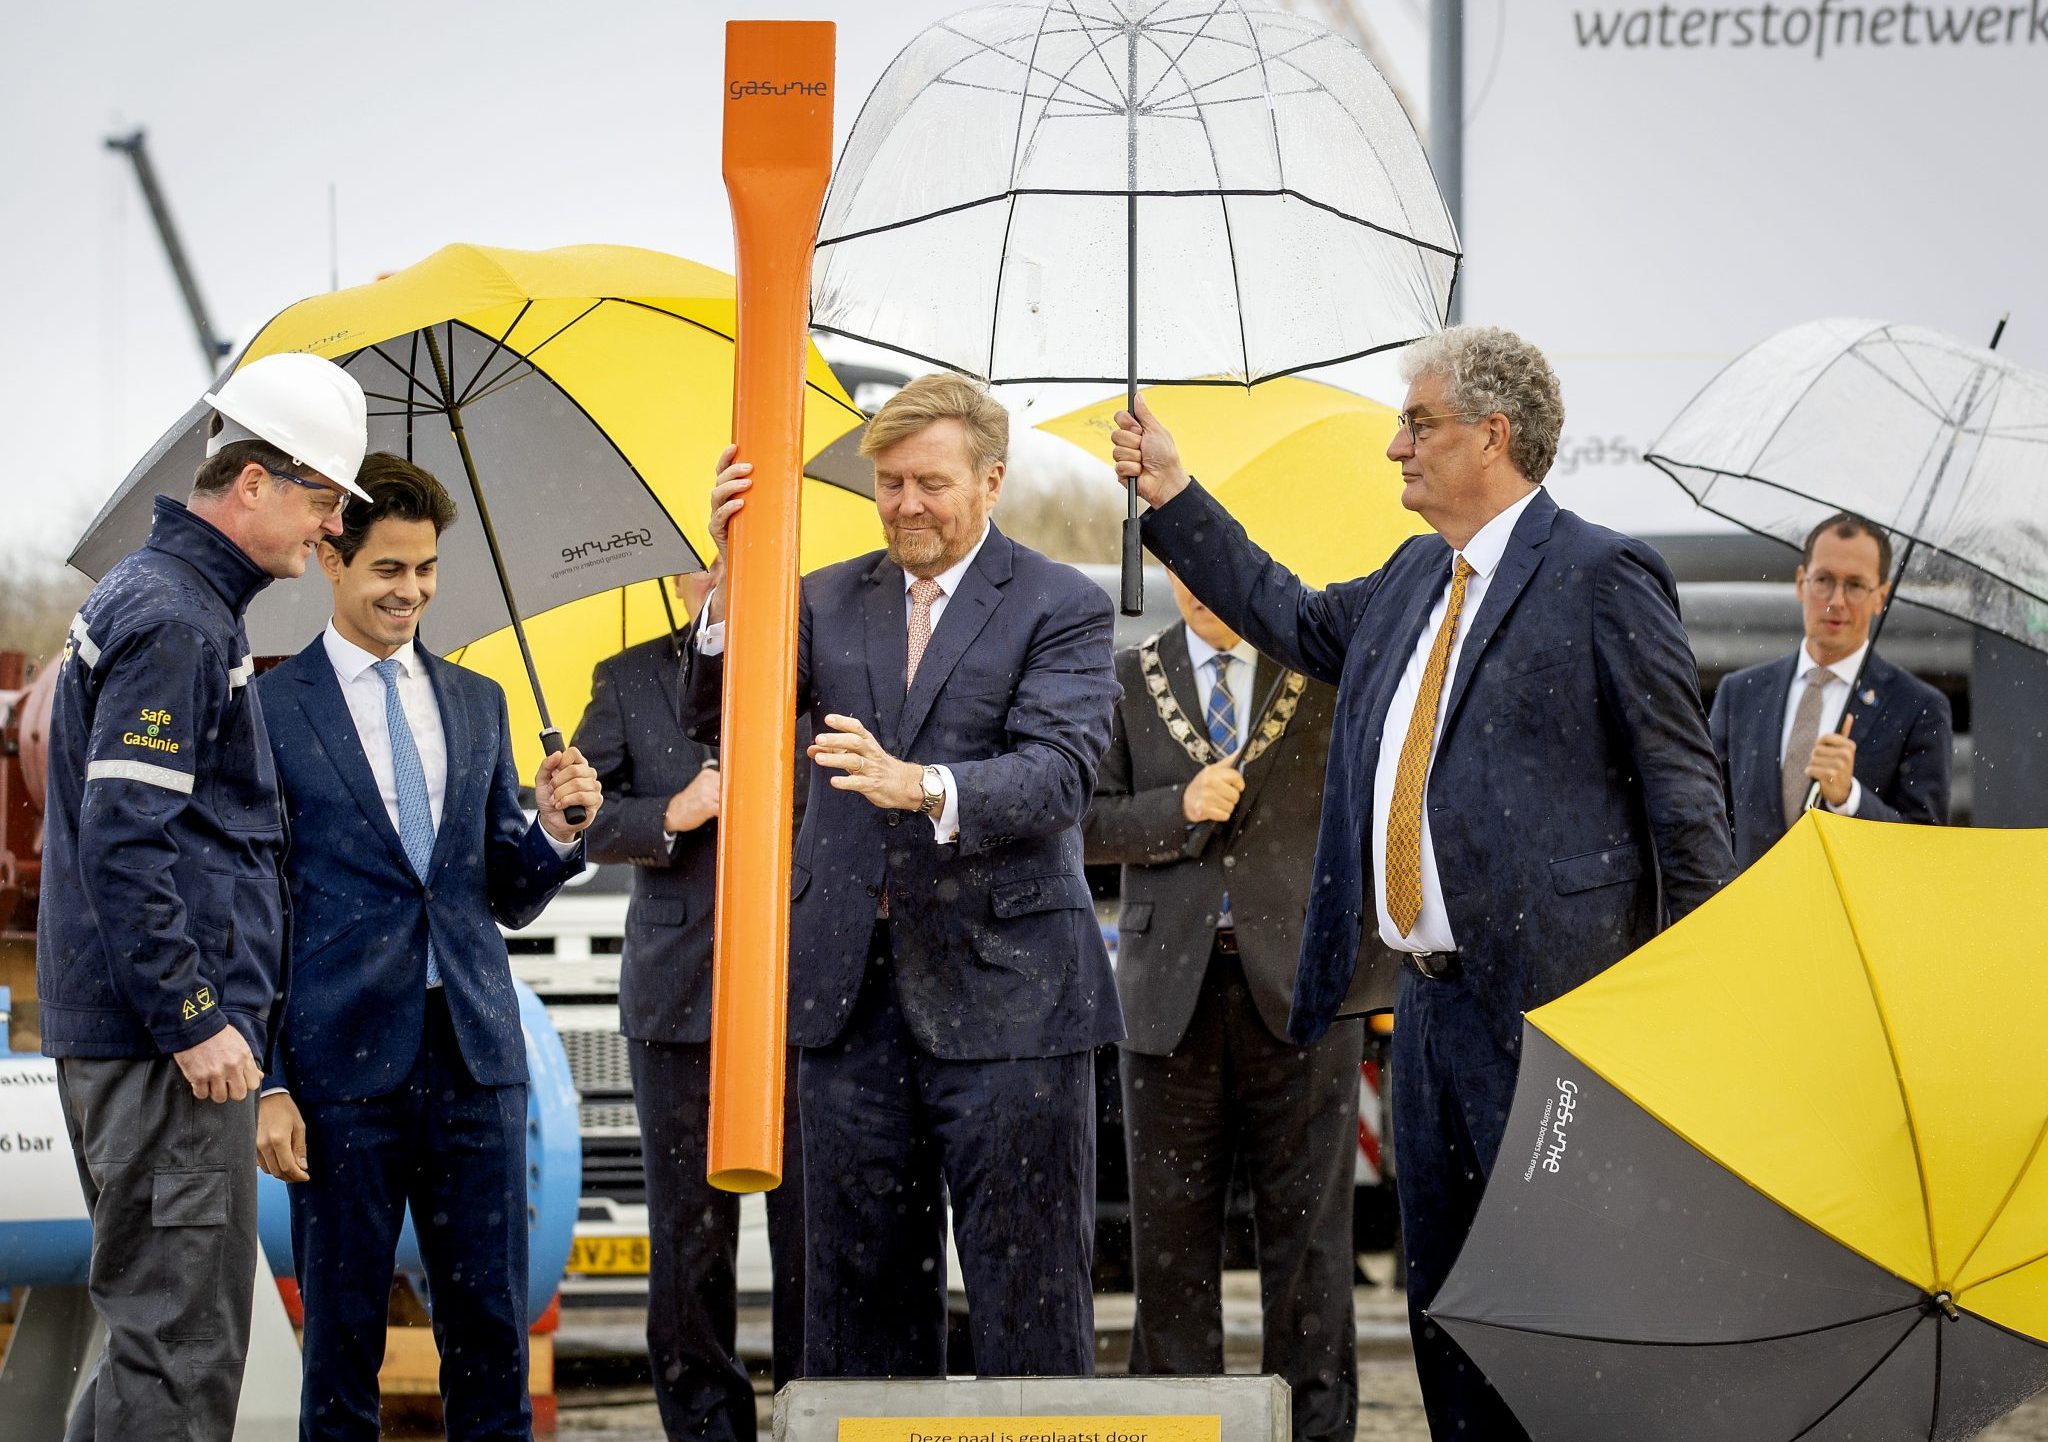 Demissionair minister Jetten en Koning Willem-Alexander starten de aanleg.